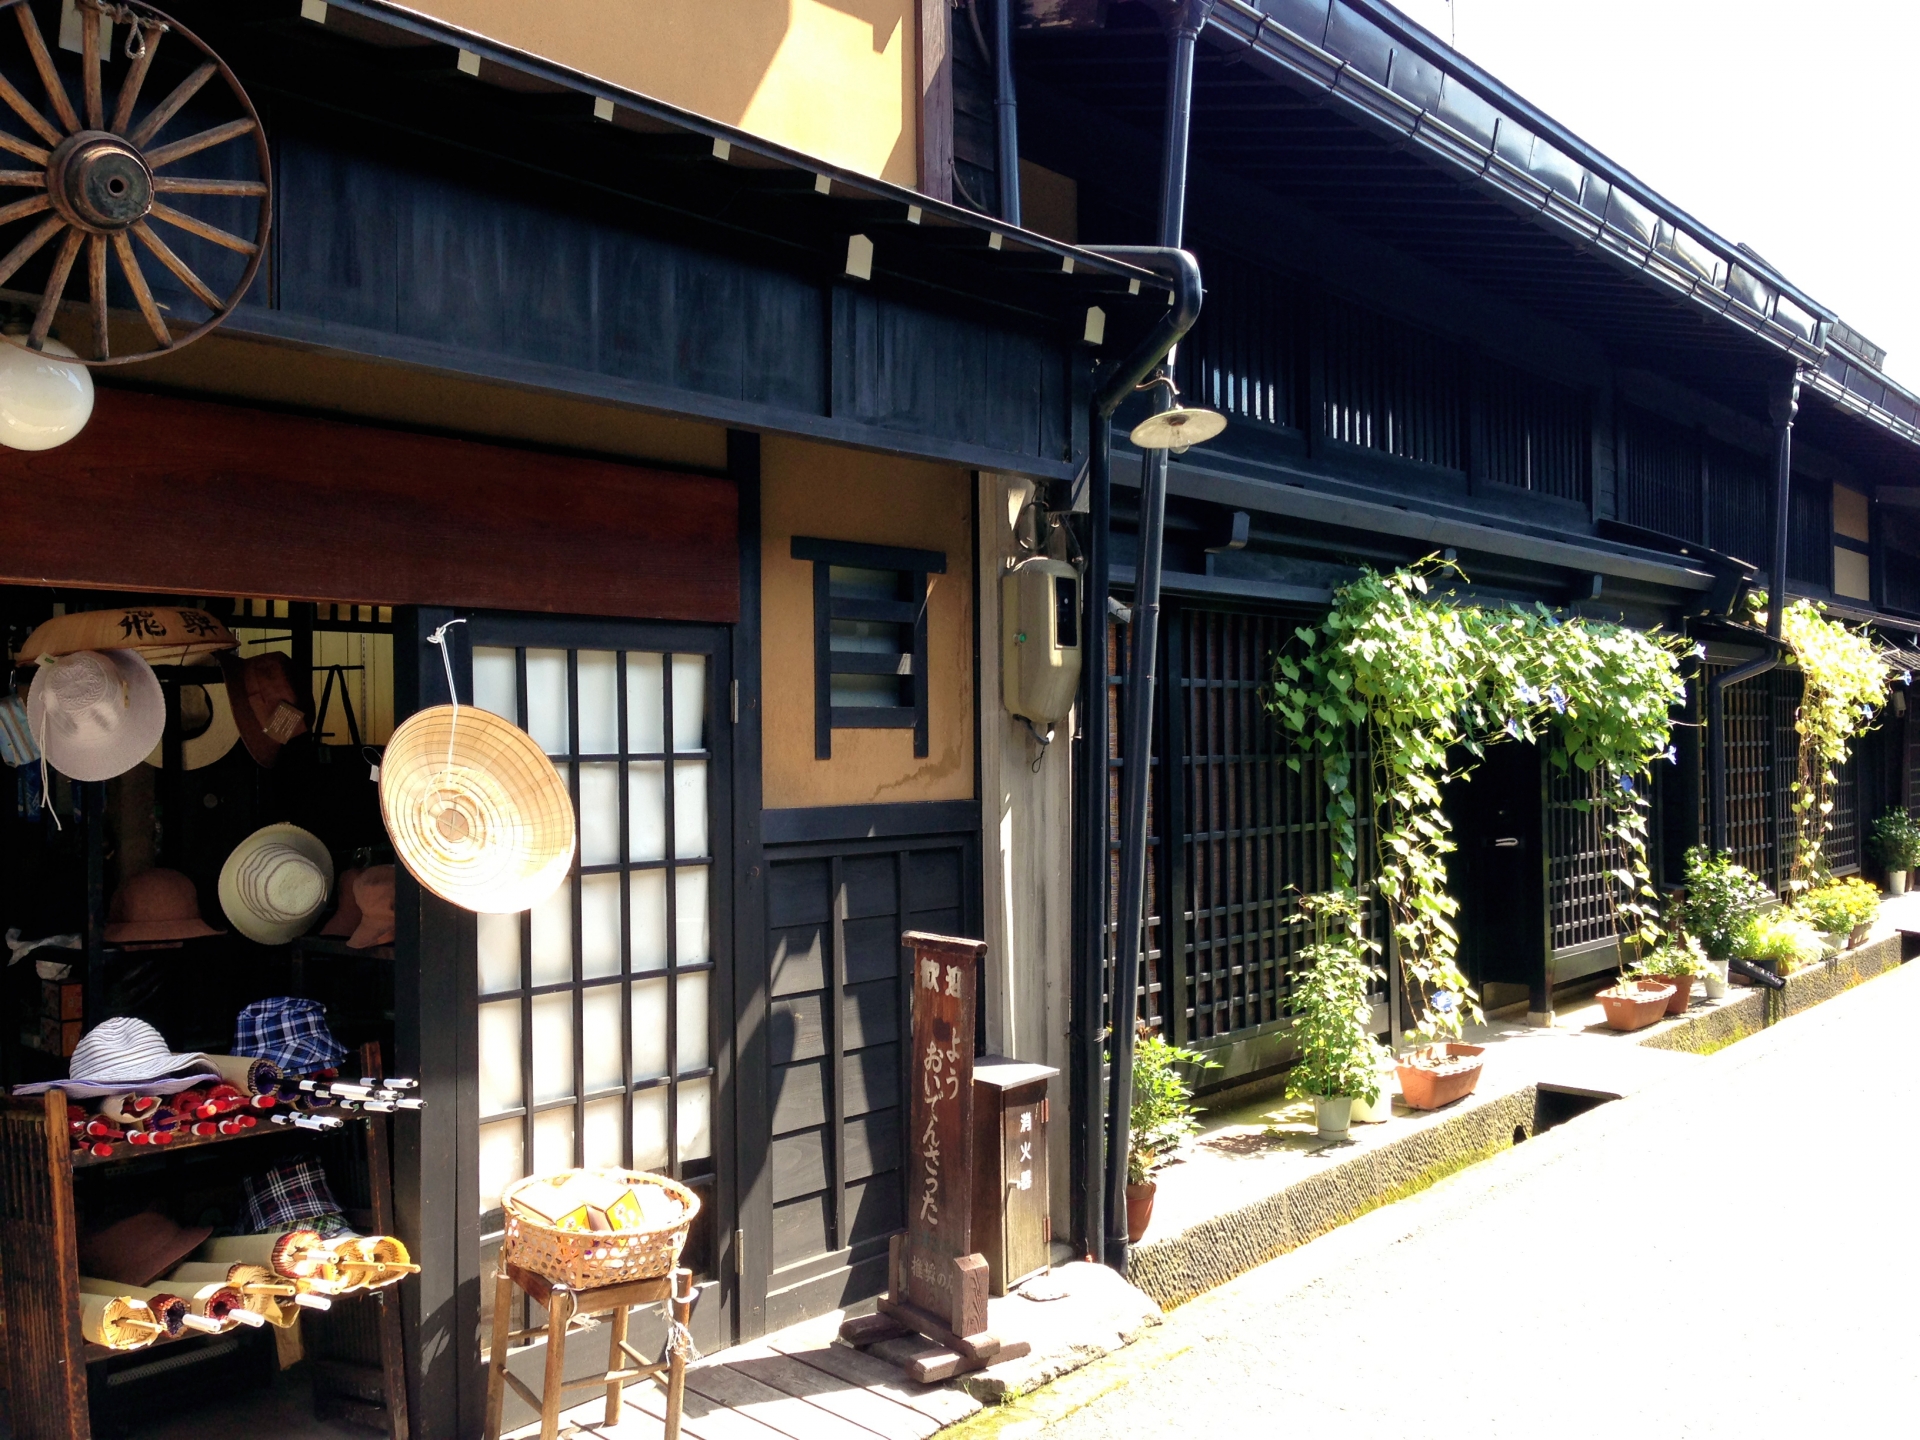 Takayama Historic Old Town